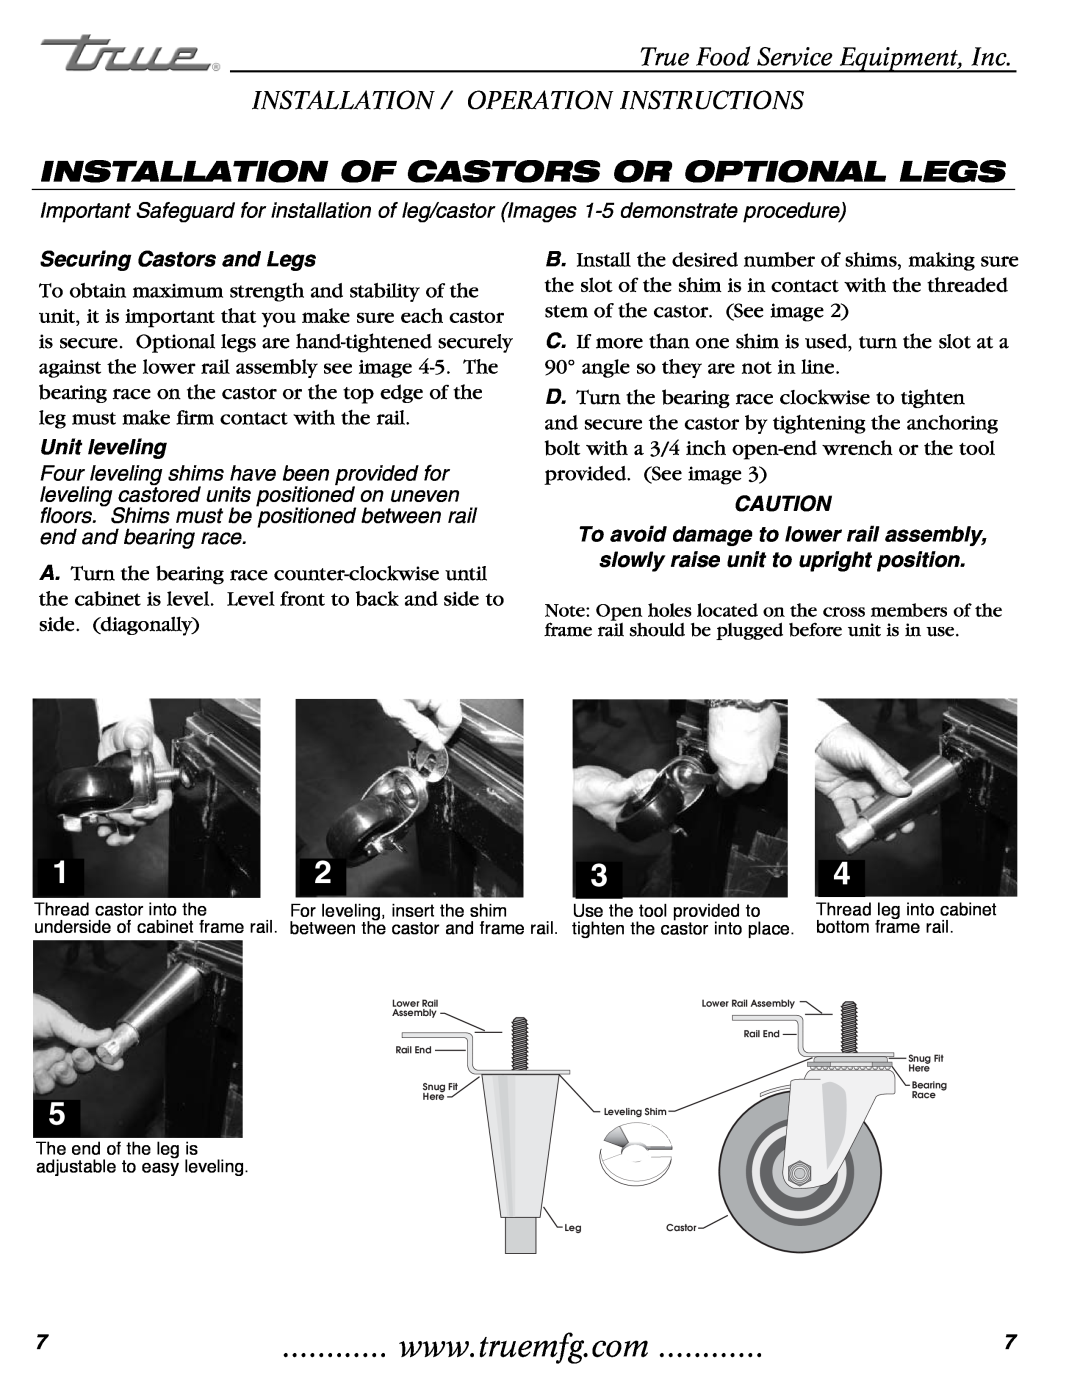 True Manufacturing Company T-35 Installation Of Castors Or Optional Legs, True Food Service Equipment, Inc, Unit leveling 